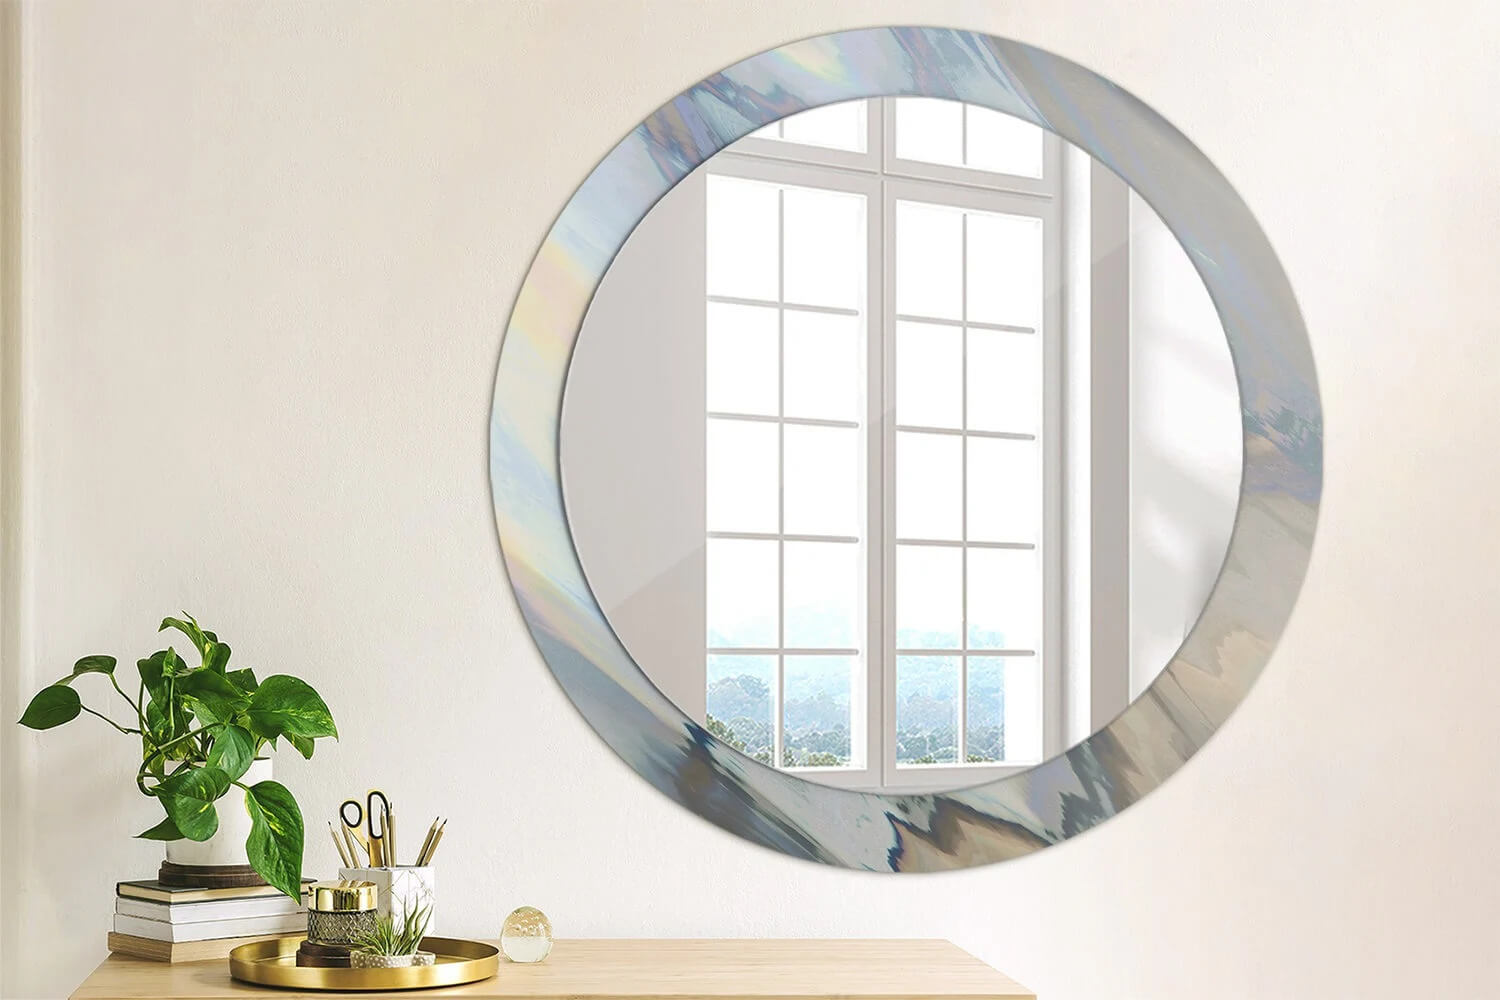 DIY holographic mirror frame